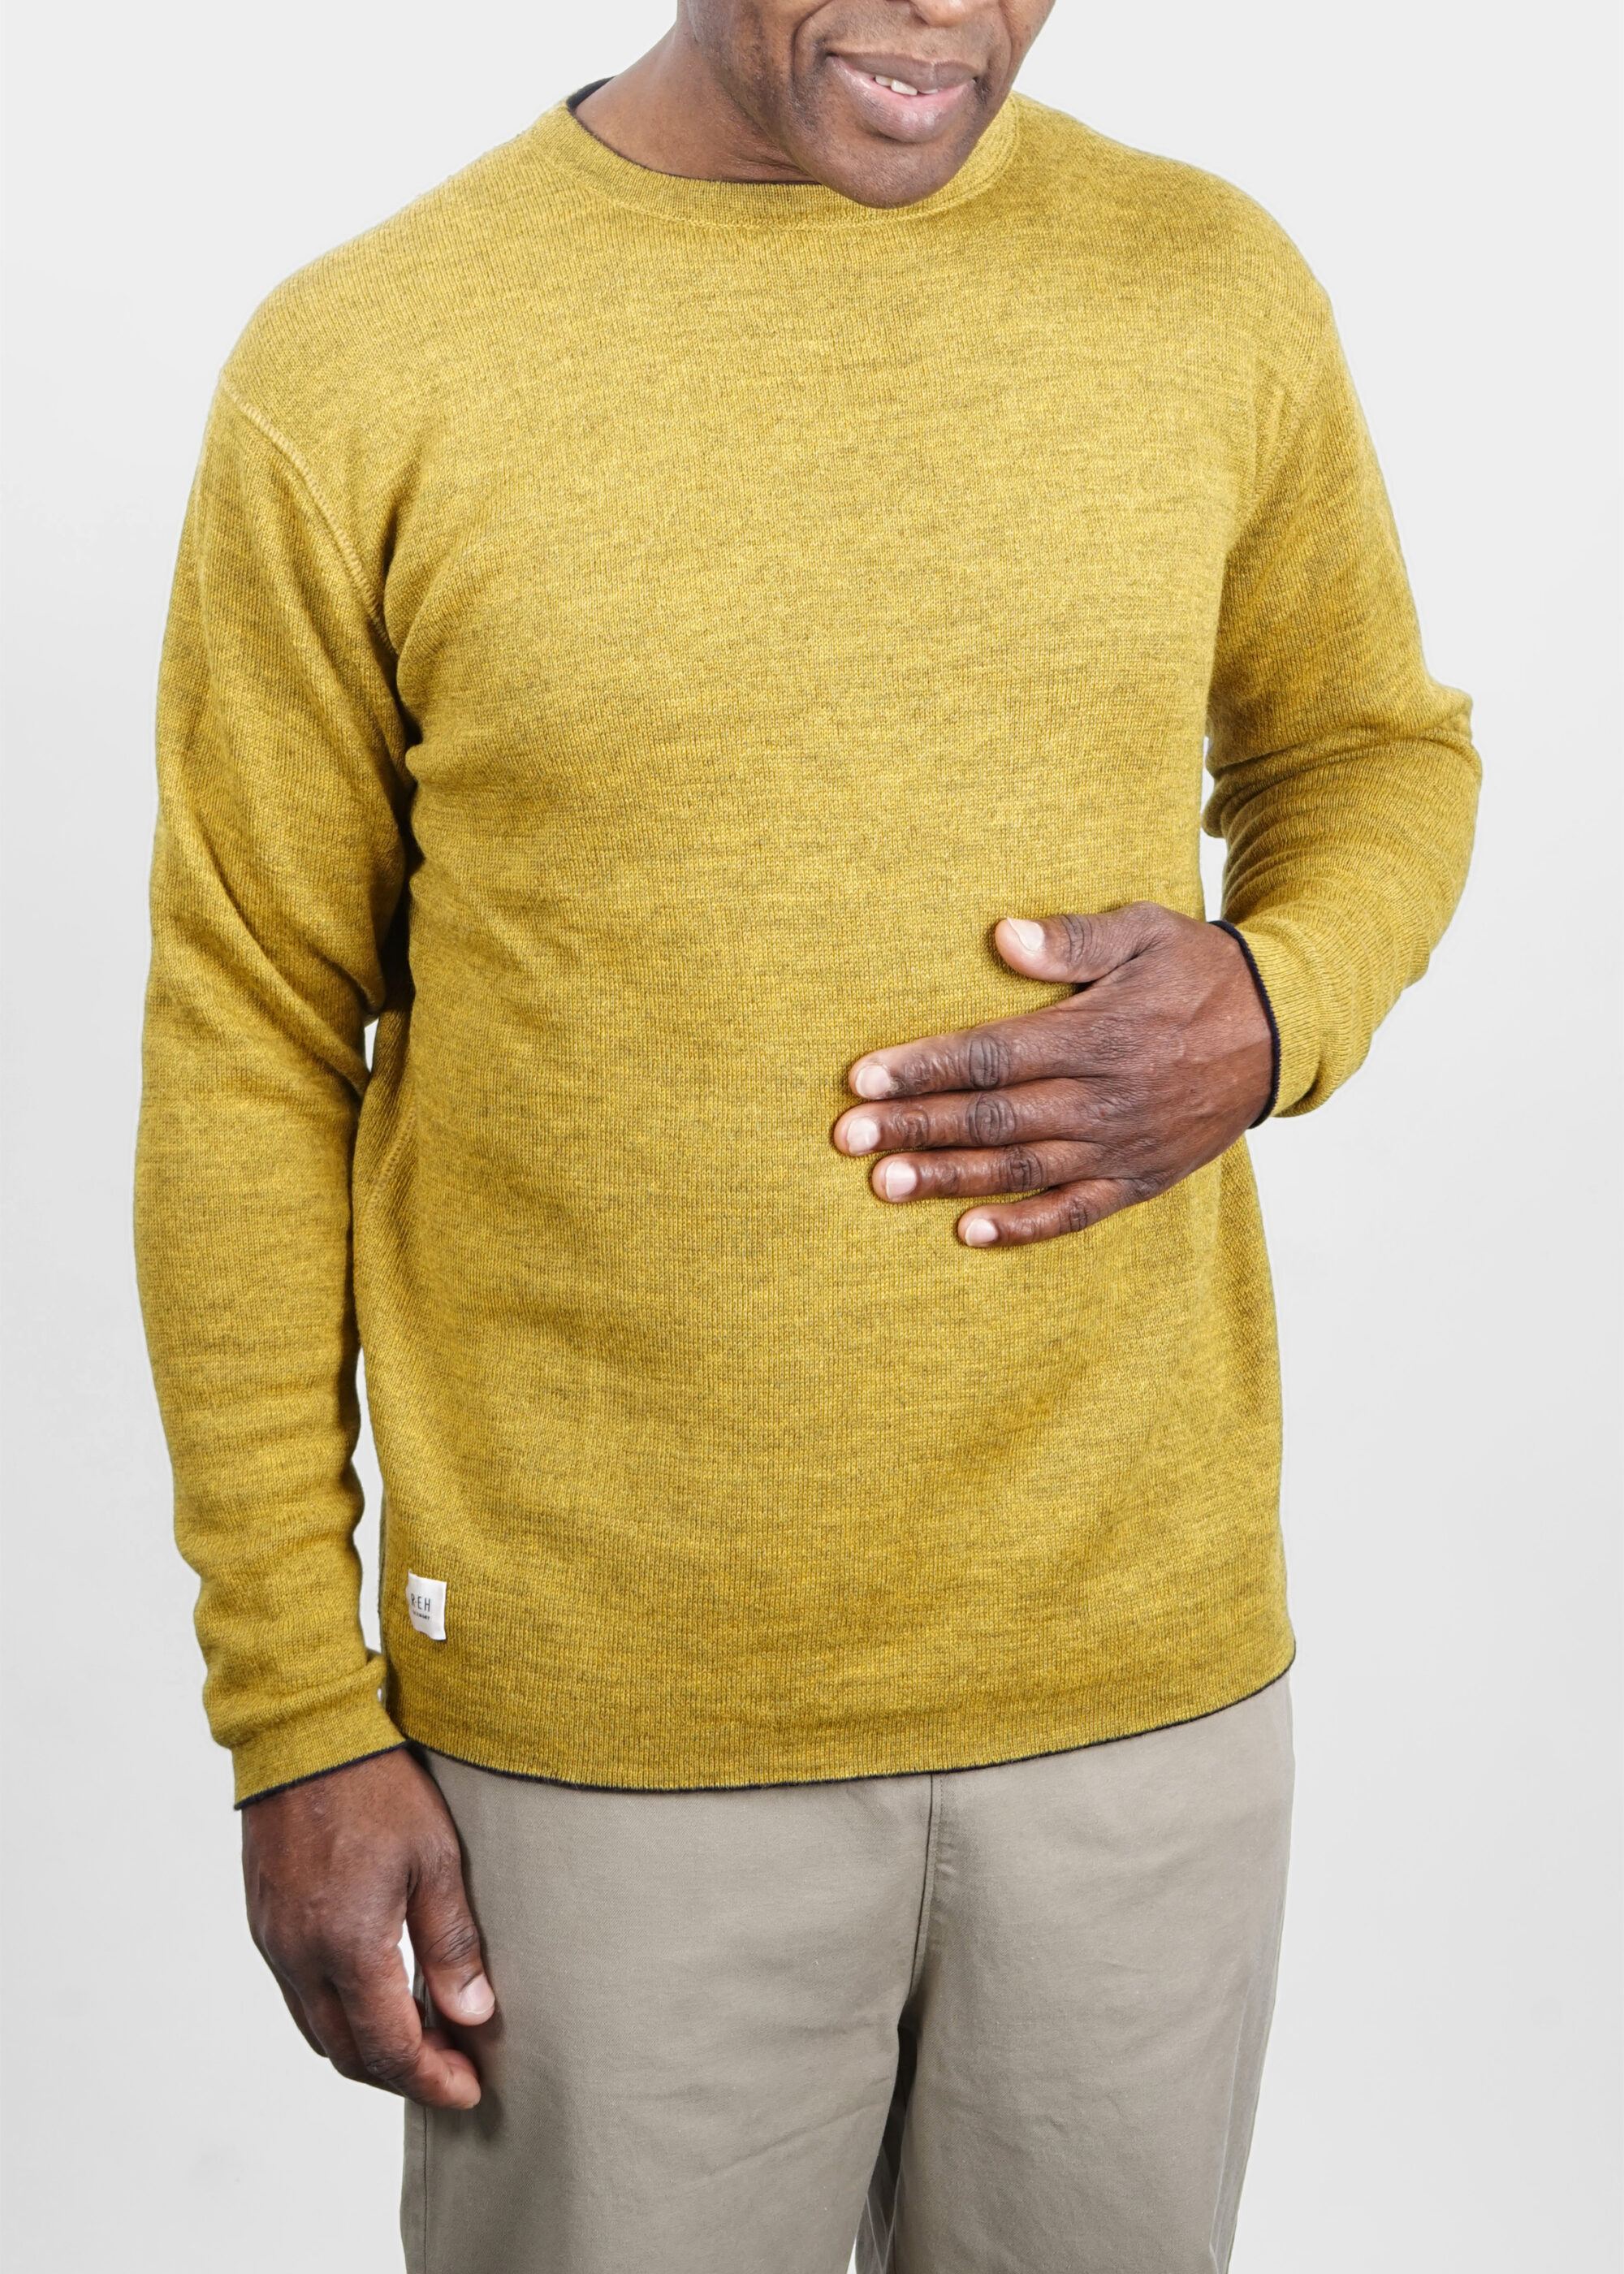 Product image for »Blauaras Mustard« Yellow Navy Reversible Sweater Alpaca